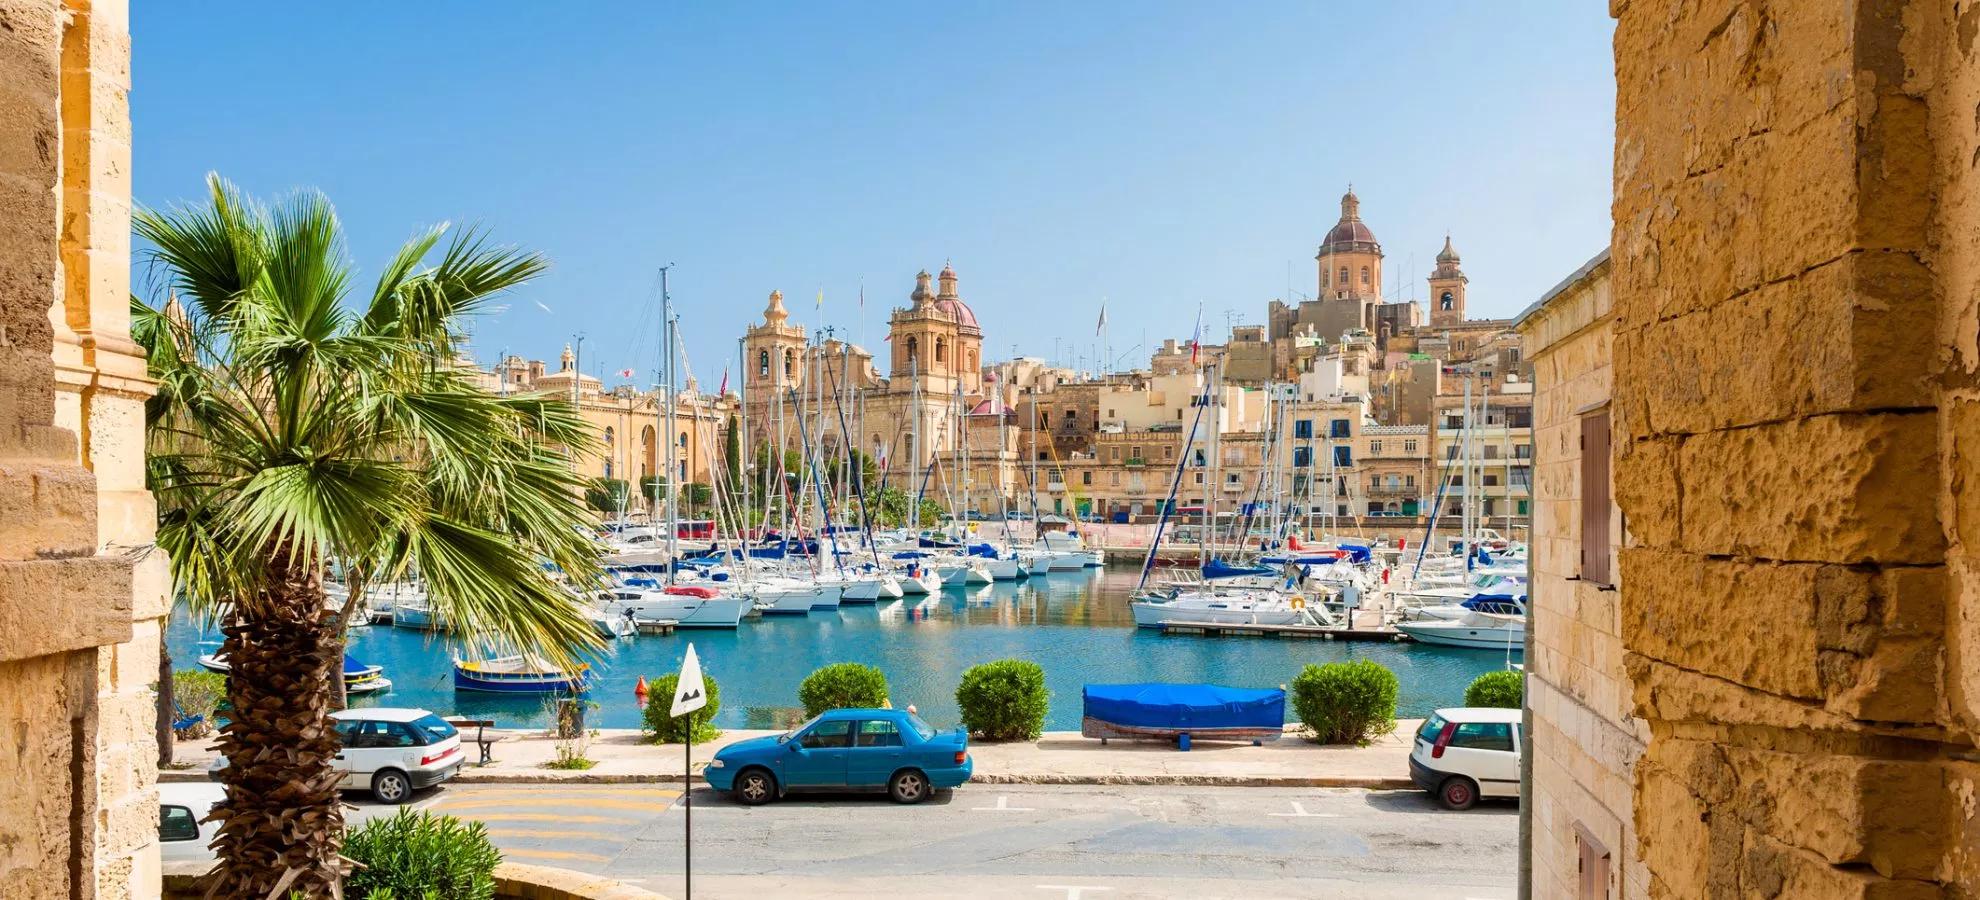 Goedkope vliegtickets Malta